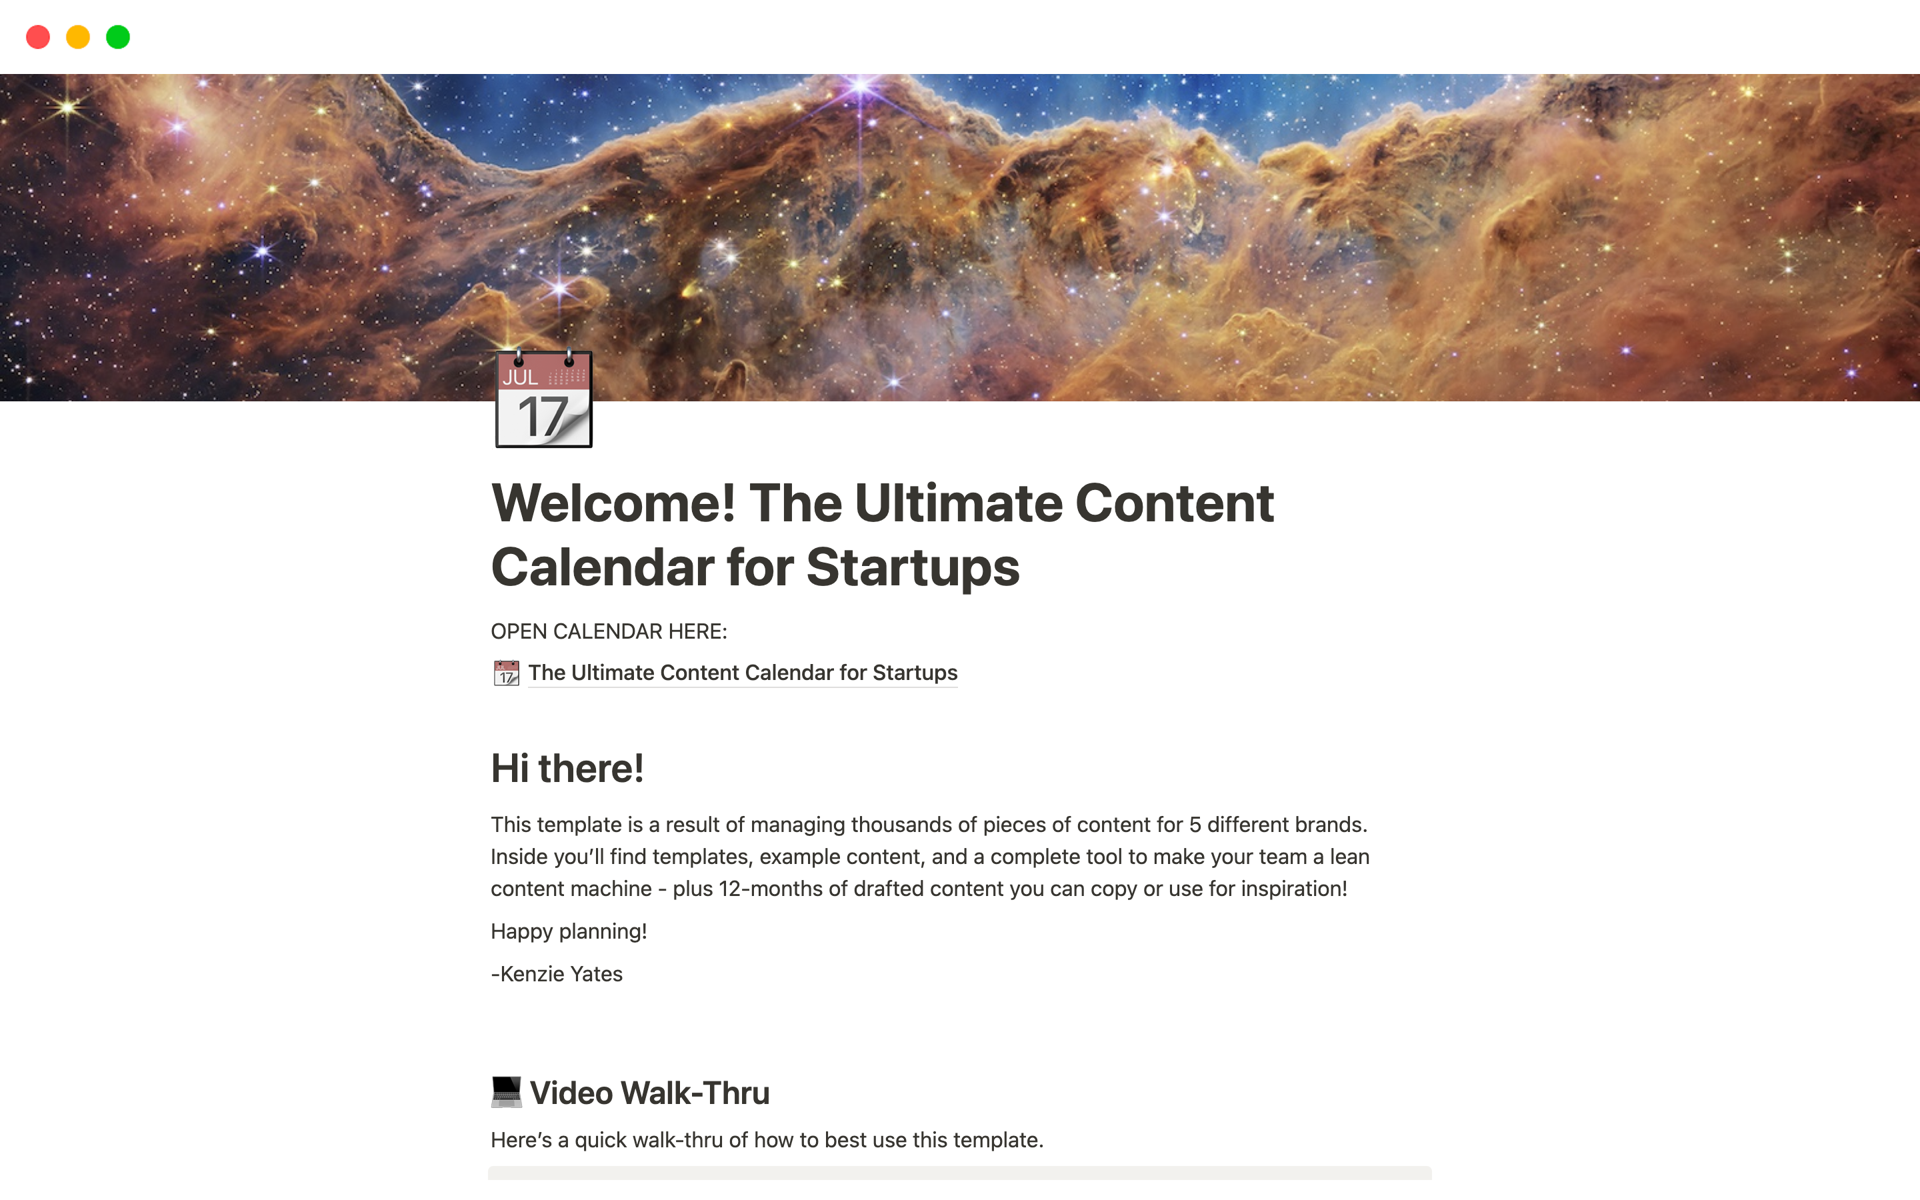 The Ultimate Content Calendar for Startups님의 템플릿 미리보기